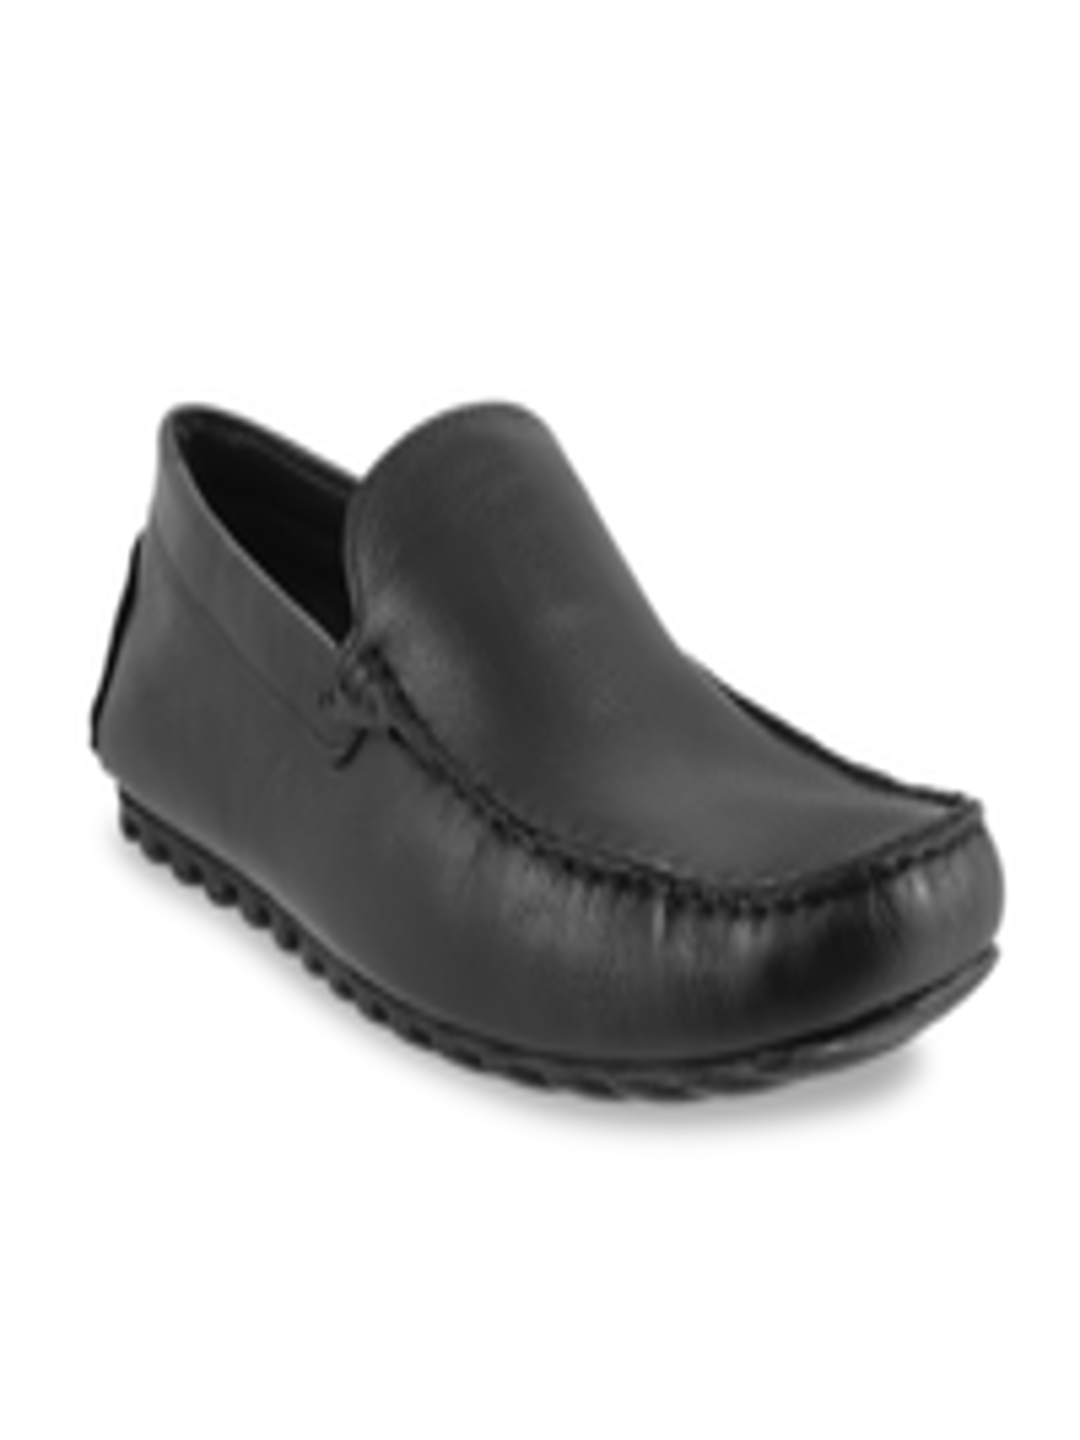 Buy Mochi Men Black Driving Shoes - Casual Shoes for Men 1821849 | Myntra